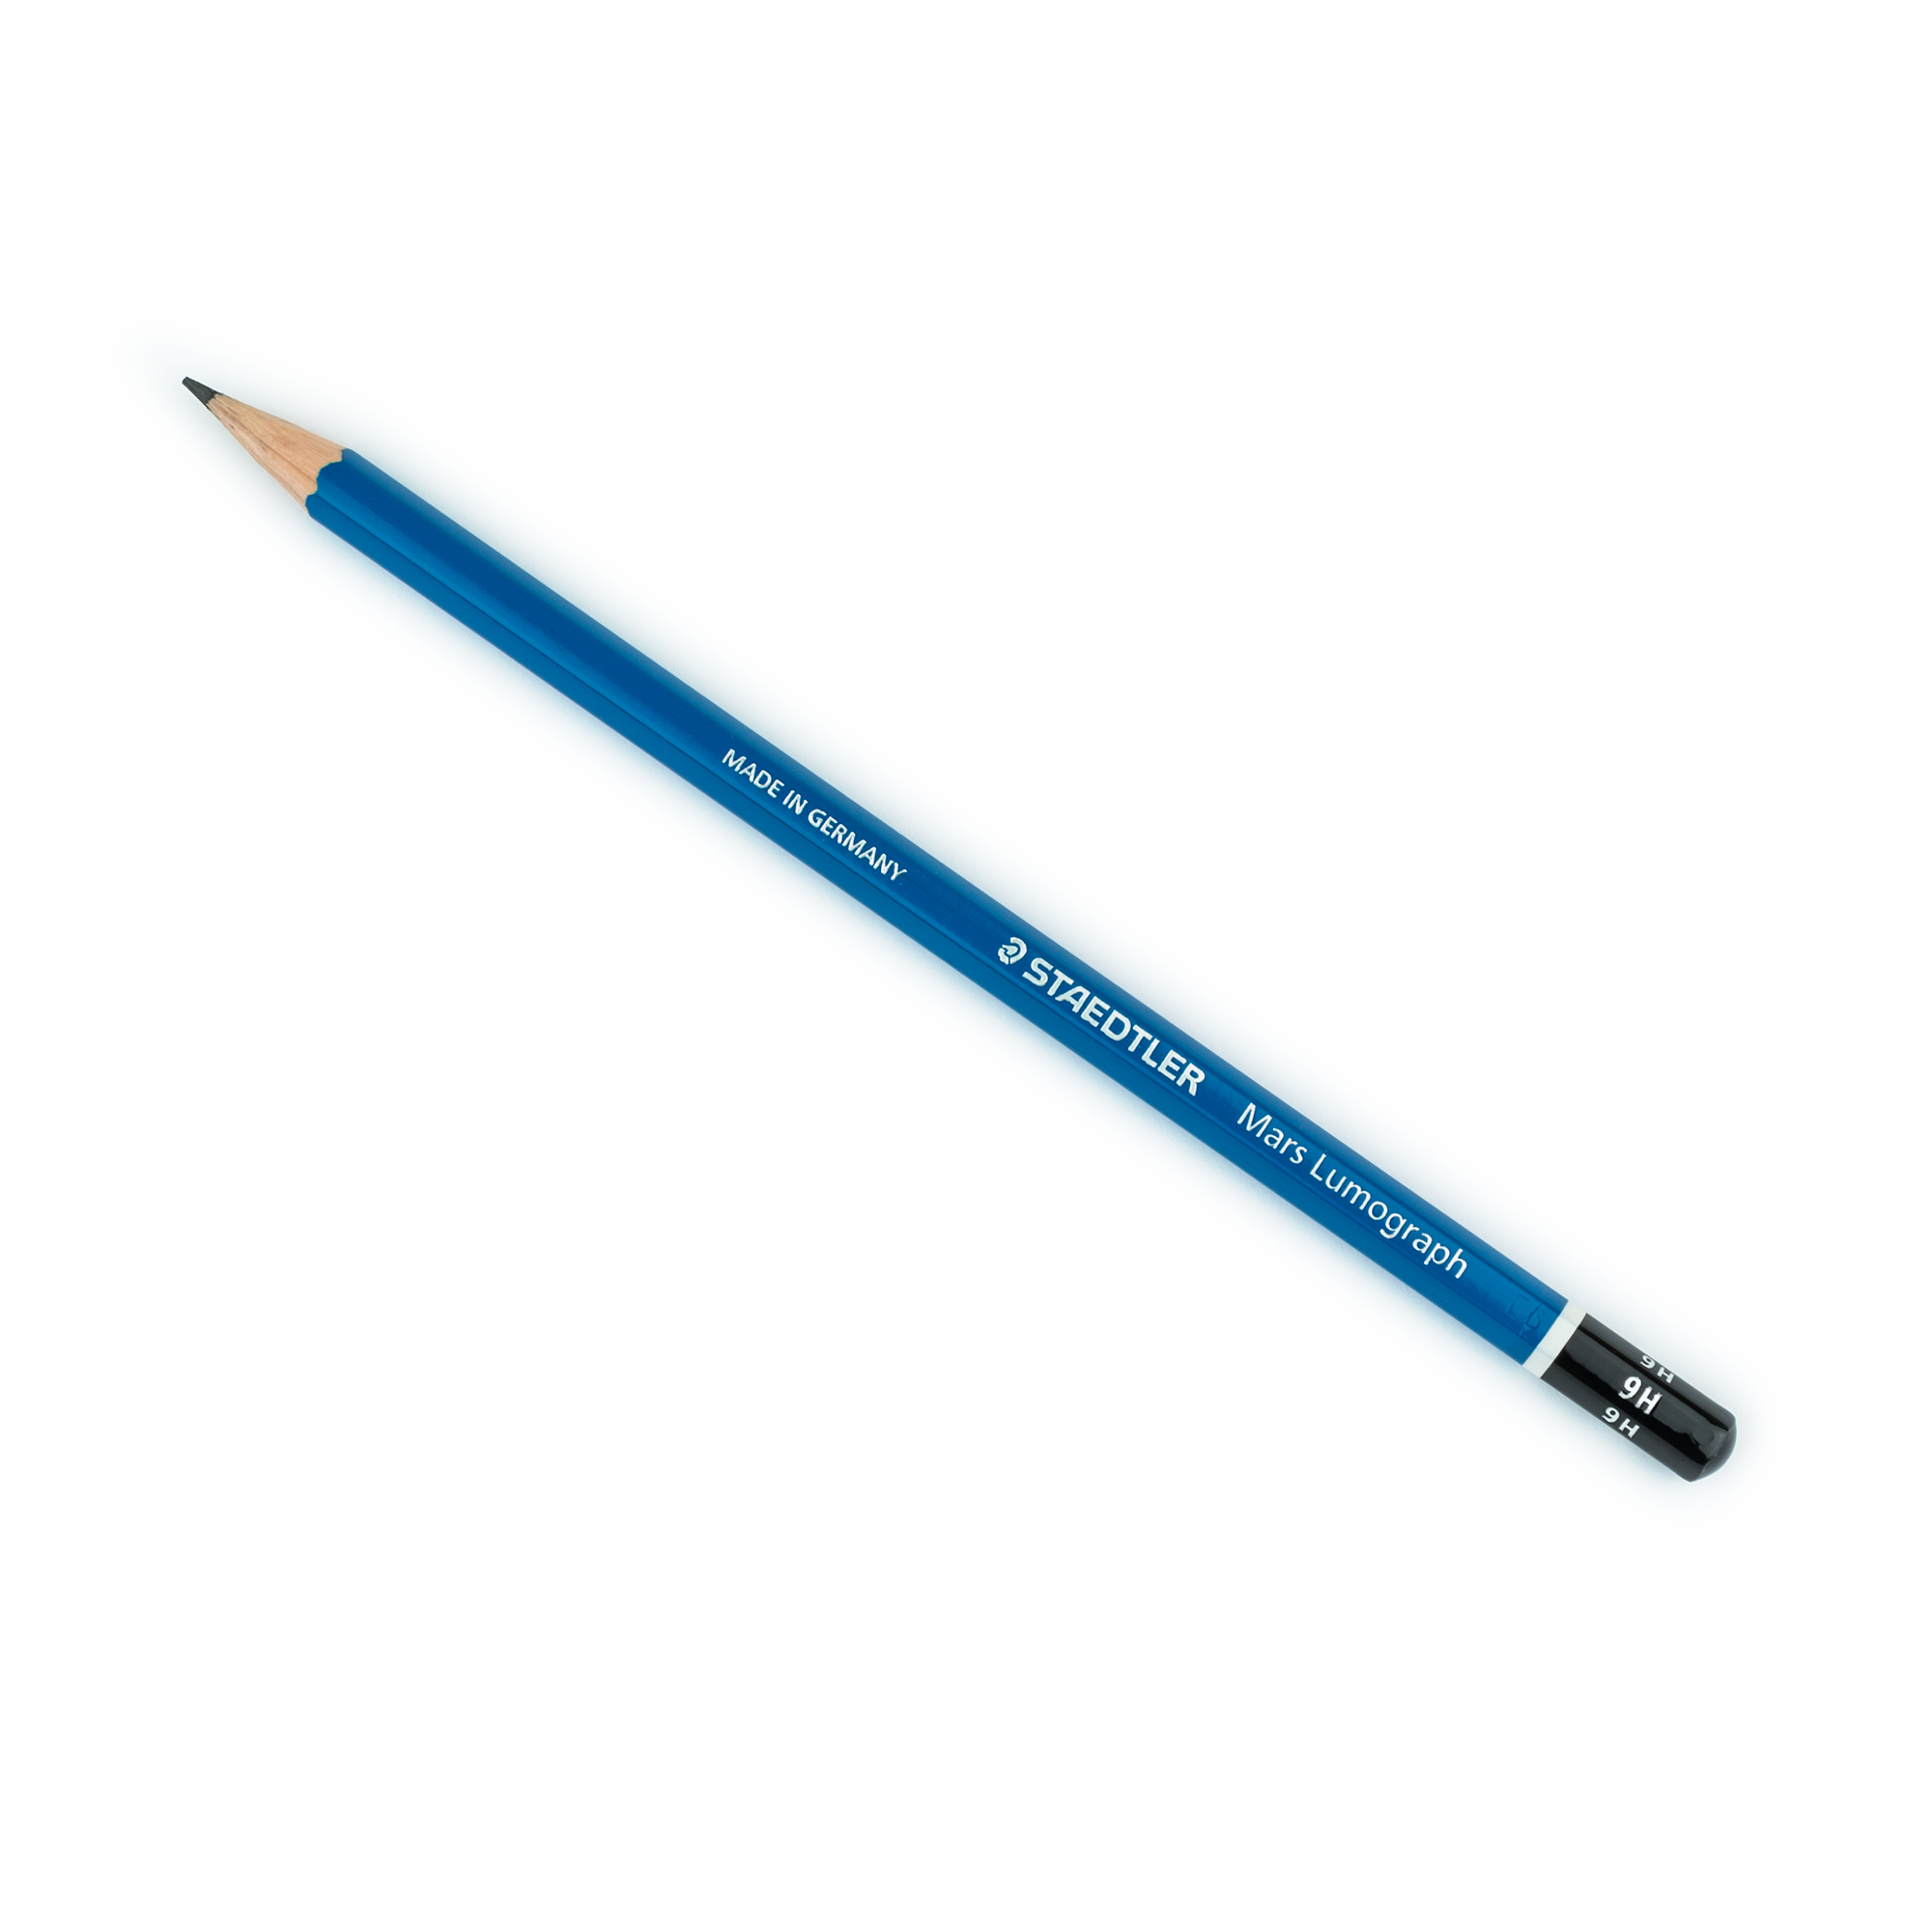 staedtler pencil